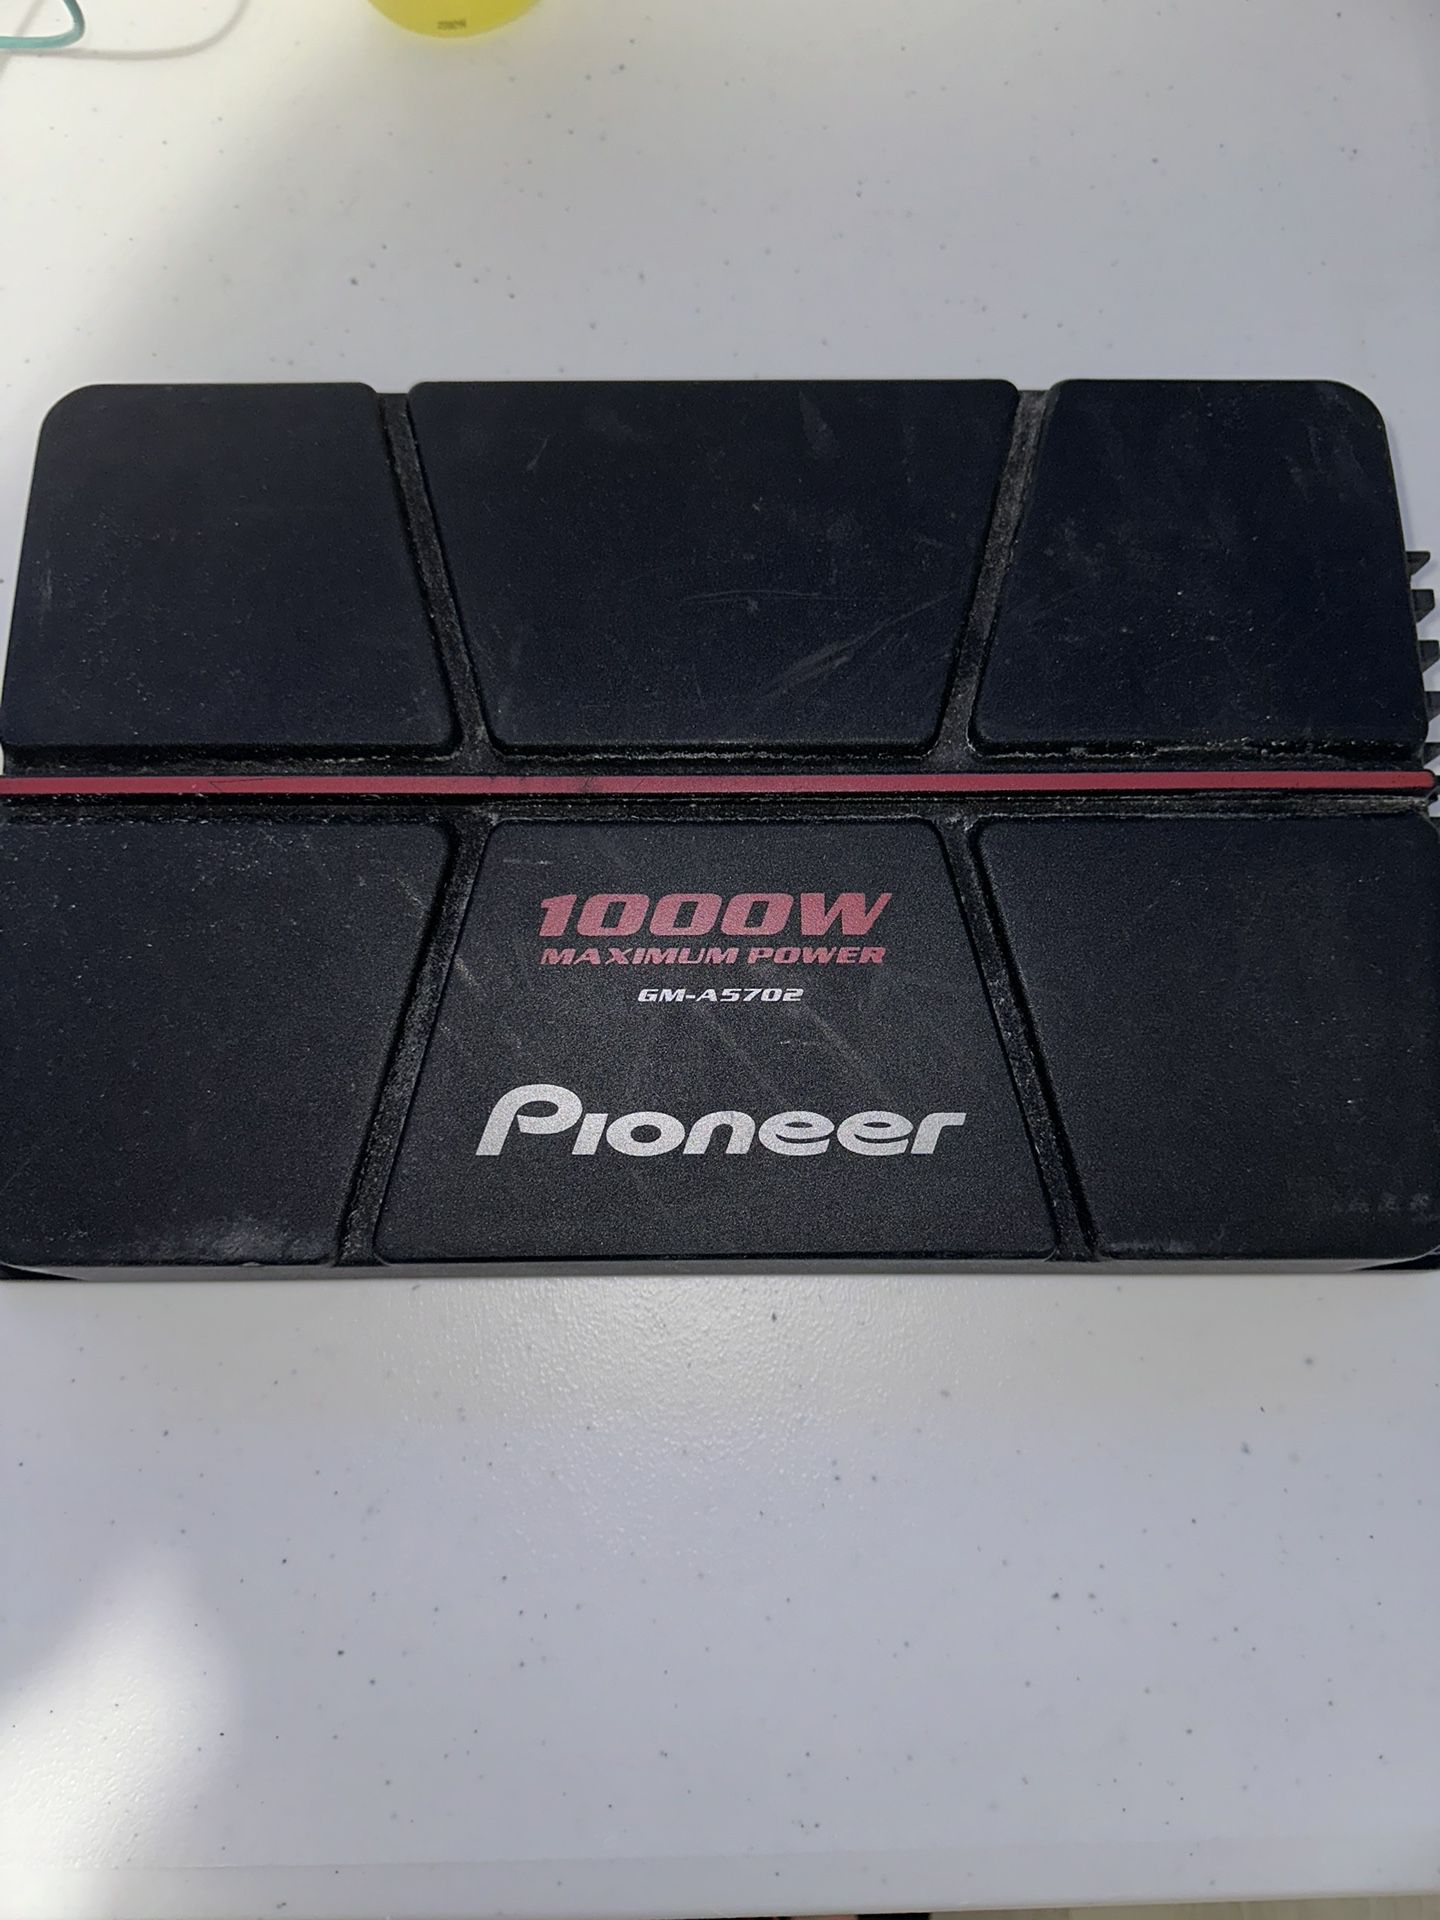 Pioneer 1000w Amp—GM-A5702